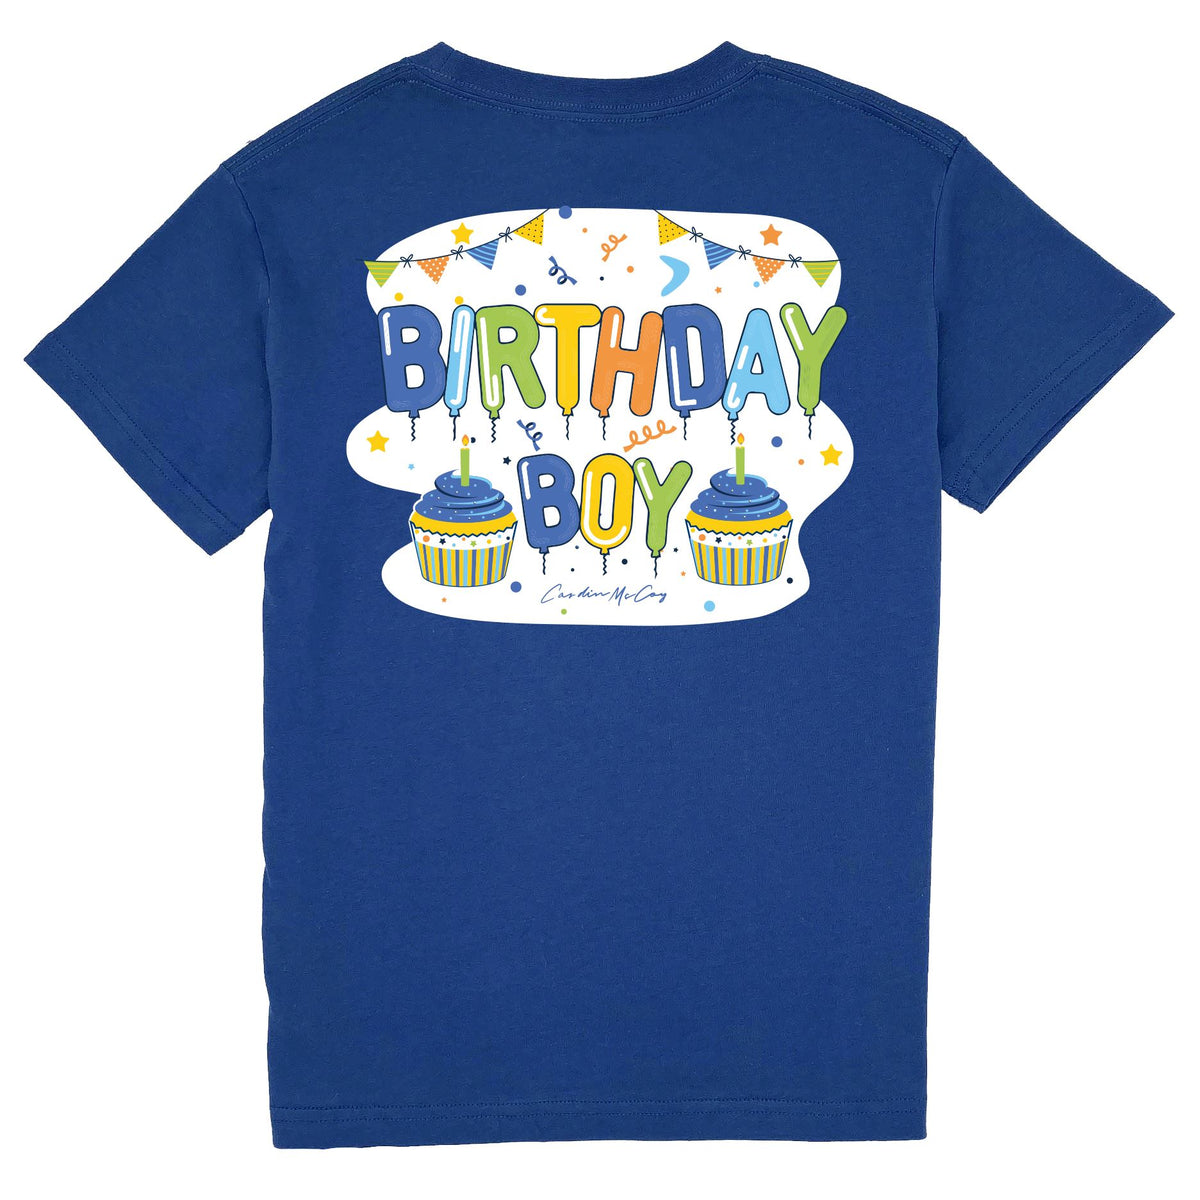 Kids' Birthday Boy Short Sleeve Pocket Tee Short Sleeve T-Shirt Cardin McCoy Blue XXS (2/3) 